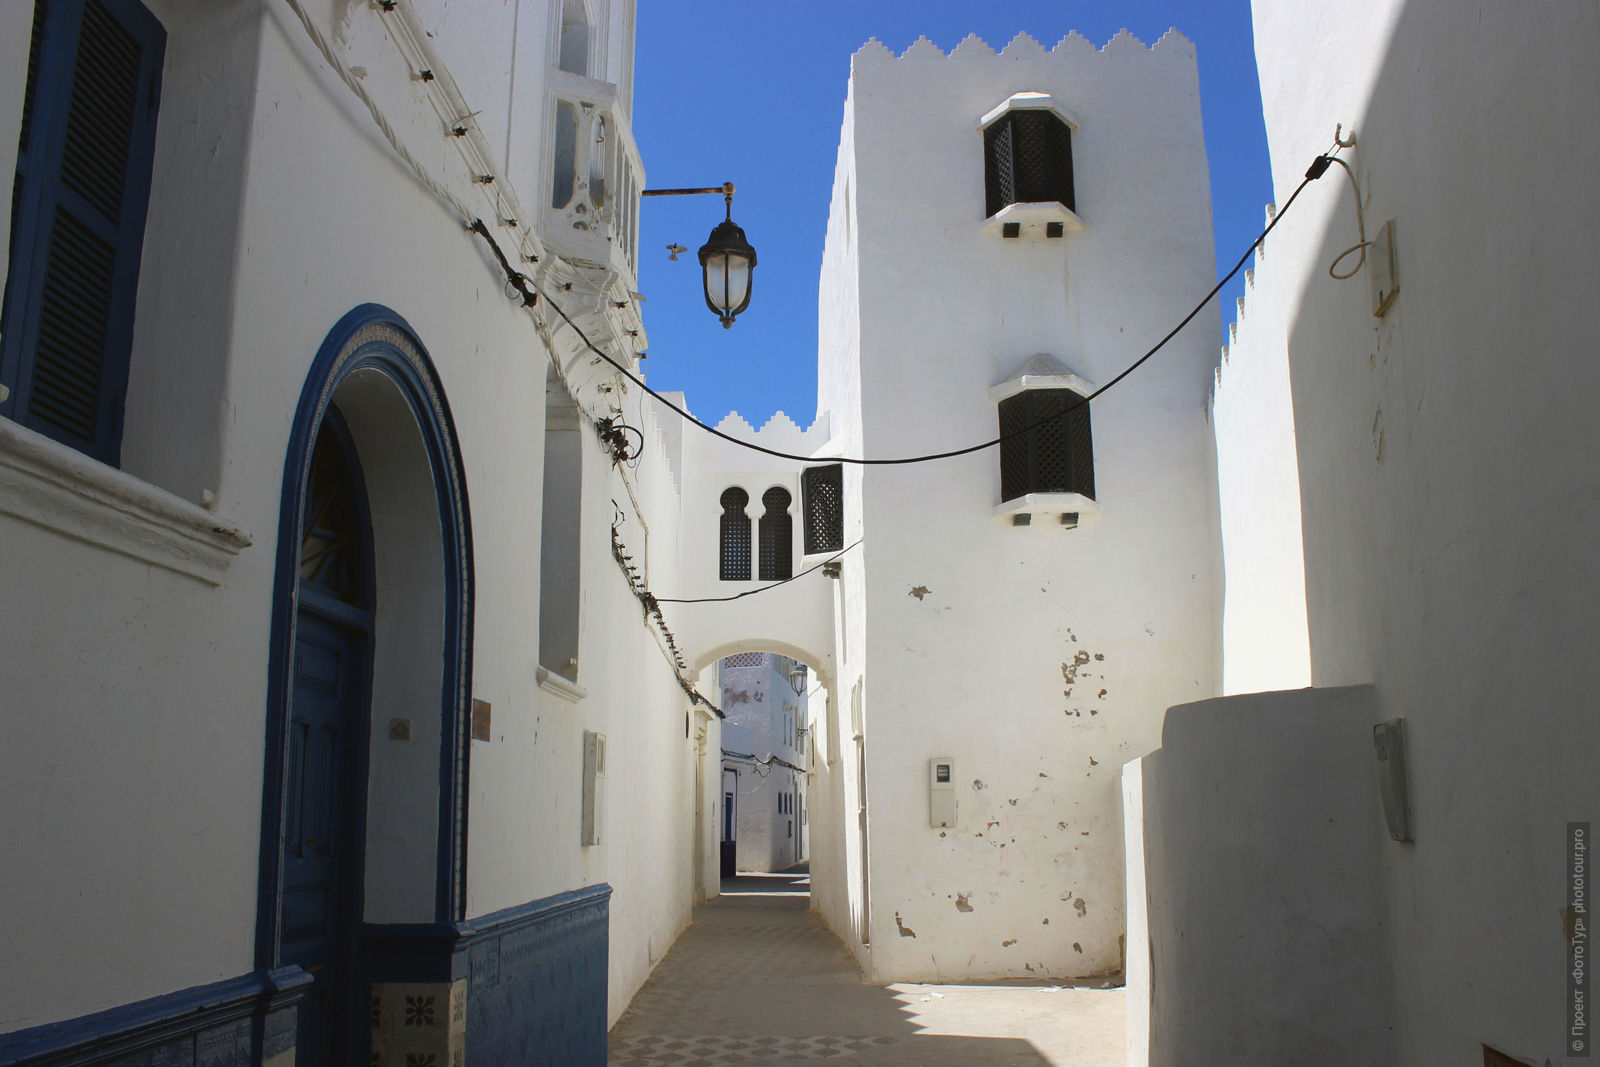 Medina Asila, Morocco. Adventure photo tour: medina, cascades, sands and ports of Morocco, April 4 - 17, 2020.